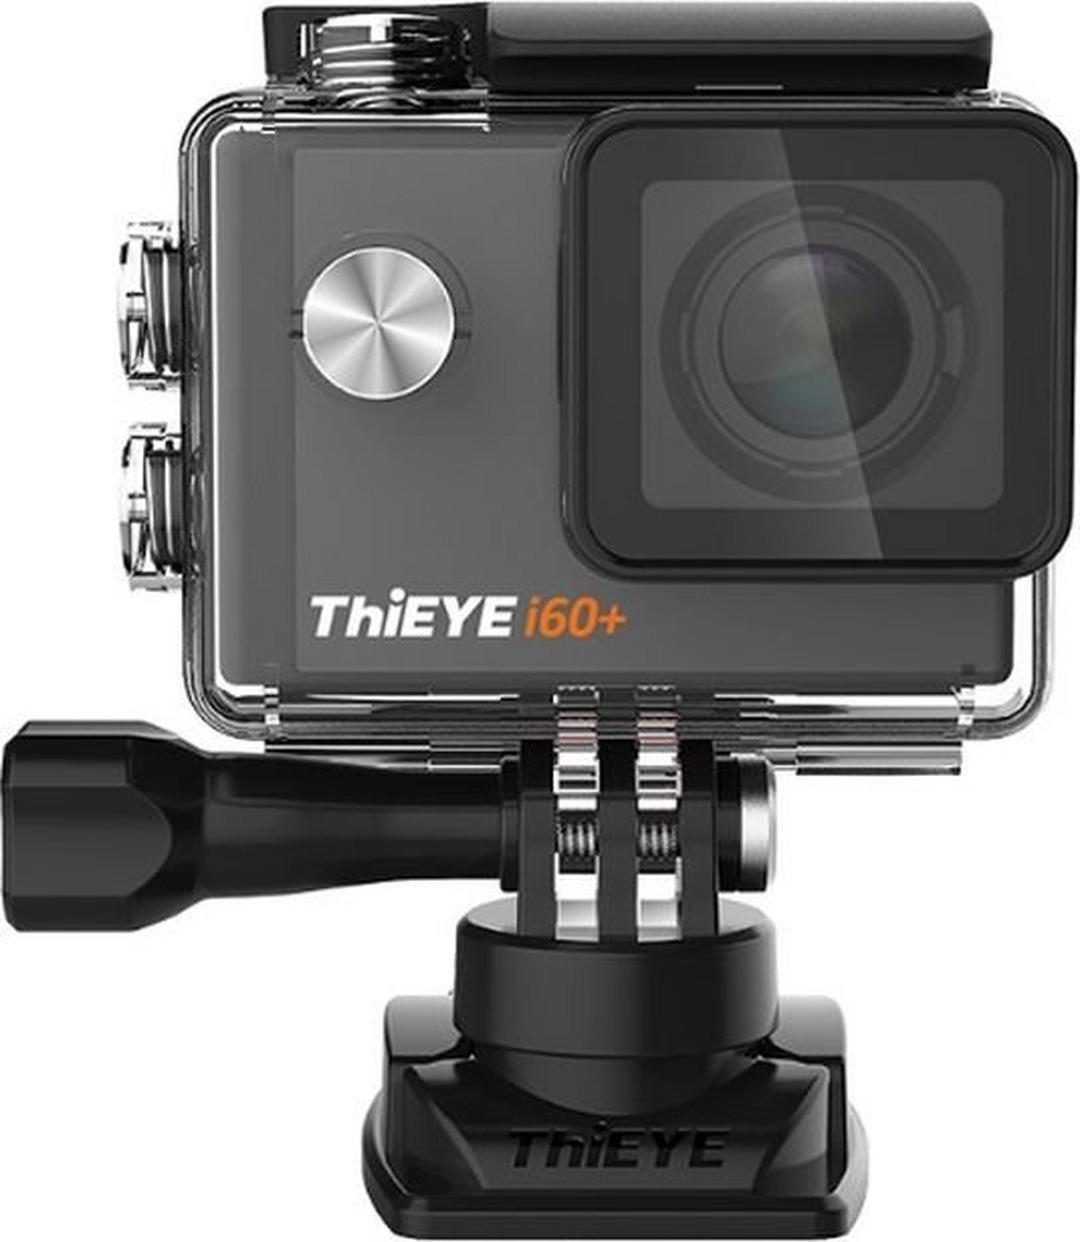 ThiEYE i60+ 4K 1080p WiFi Action Camera - Black